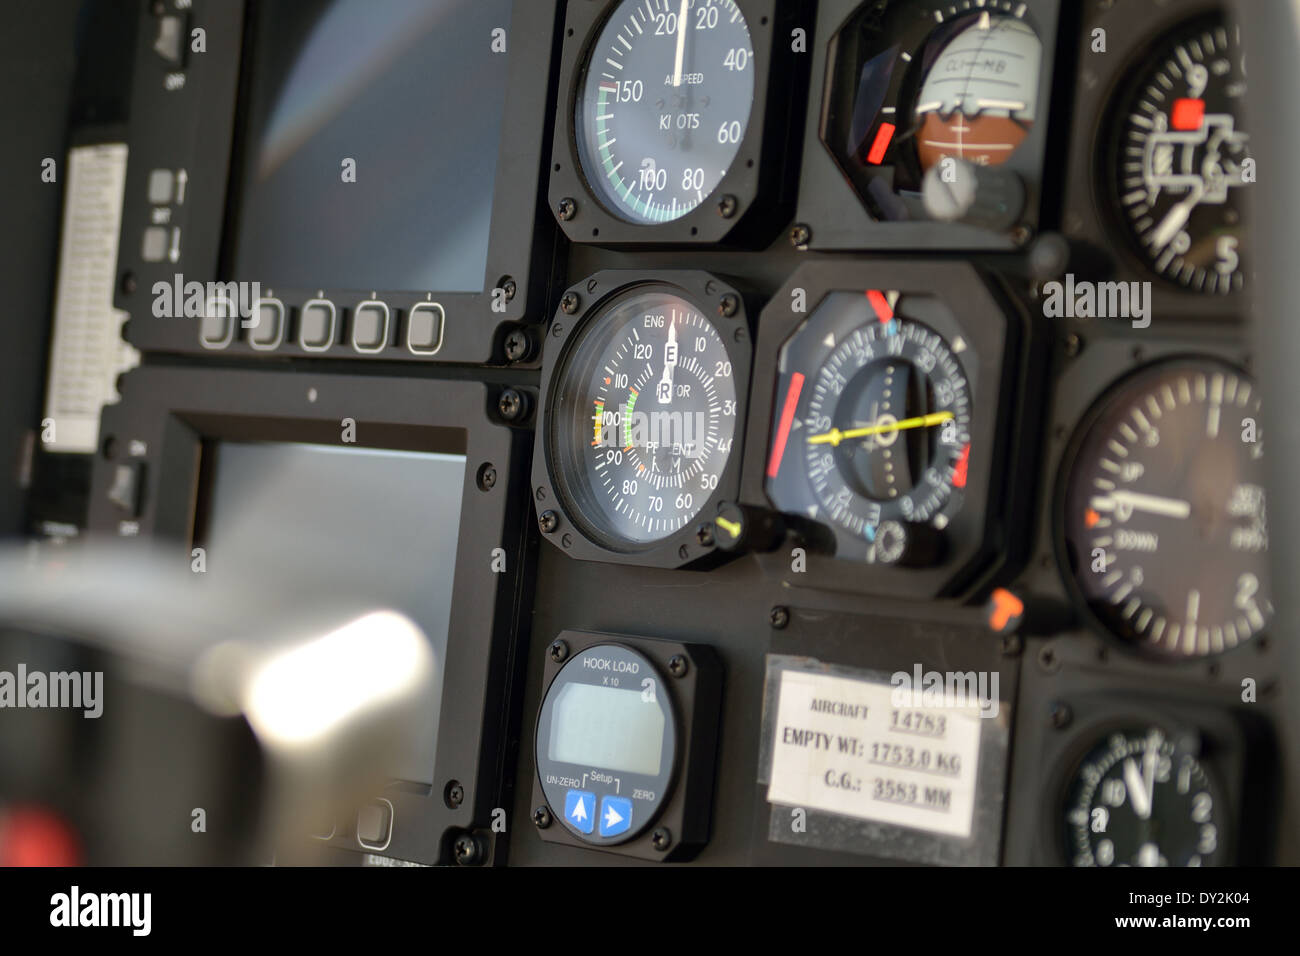 AgustaWestland AW139 (HH-139A), cockpit Instrument Panel. Stock Photo